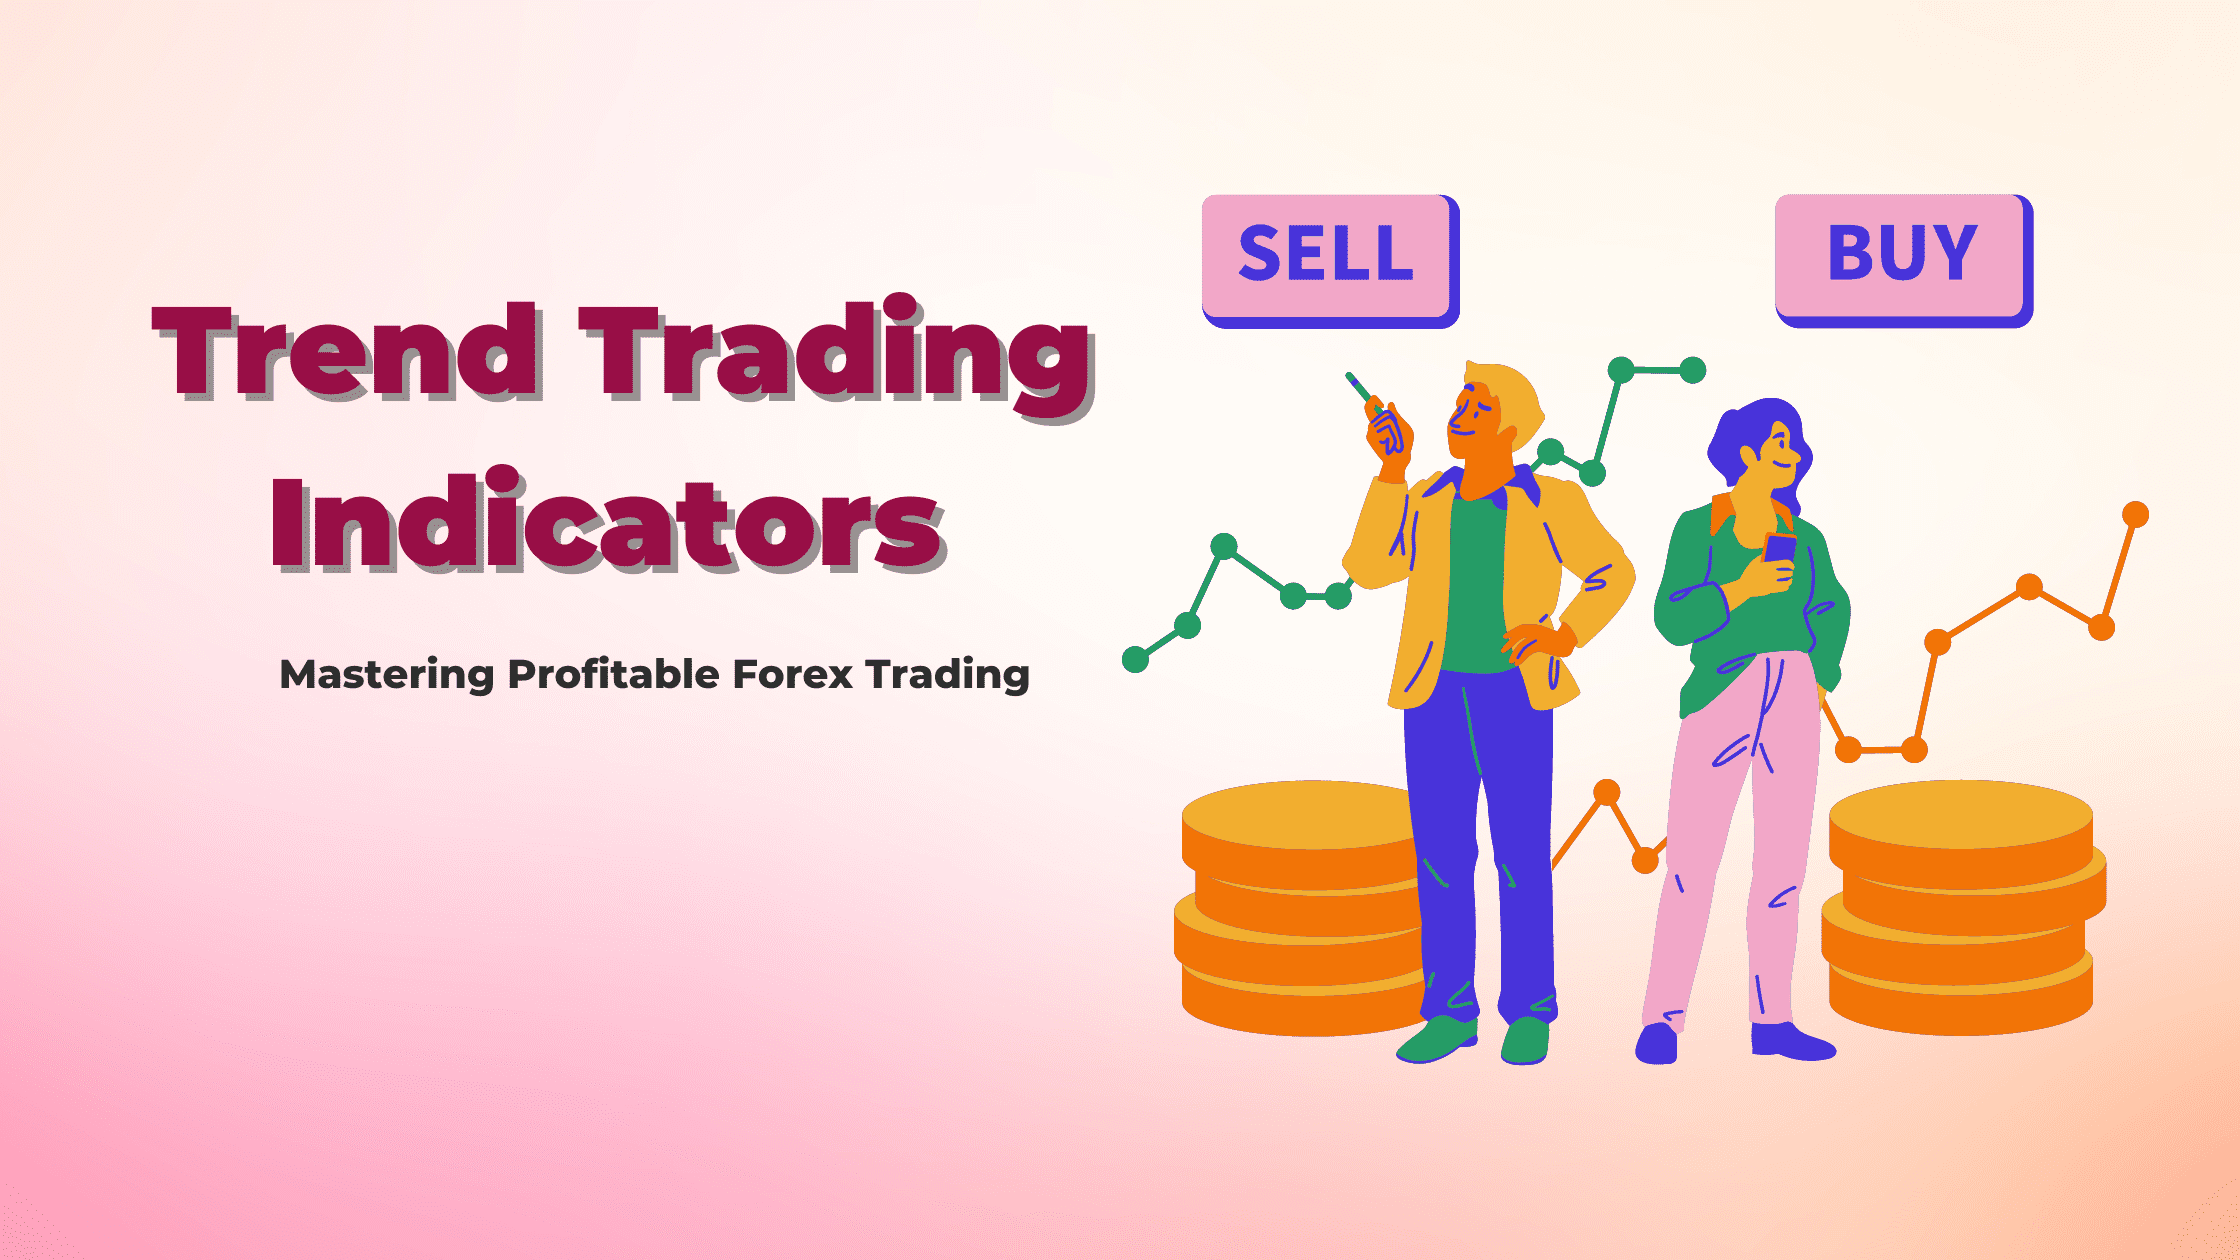 Trend Trading Indicators: Mastering Profitable Forex Trading